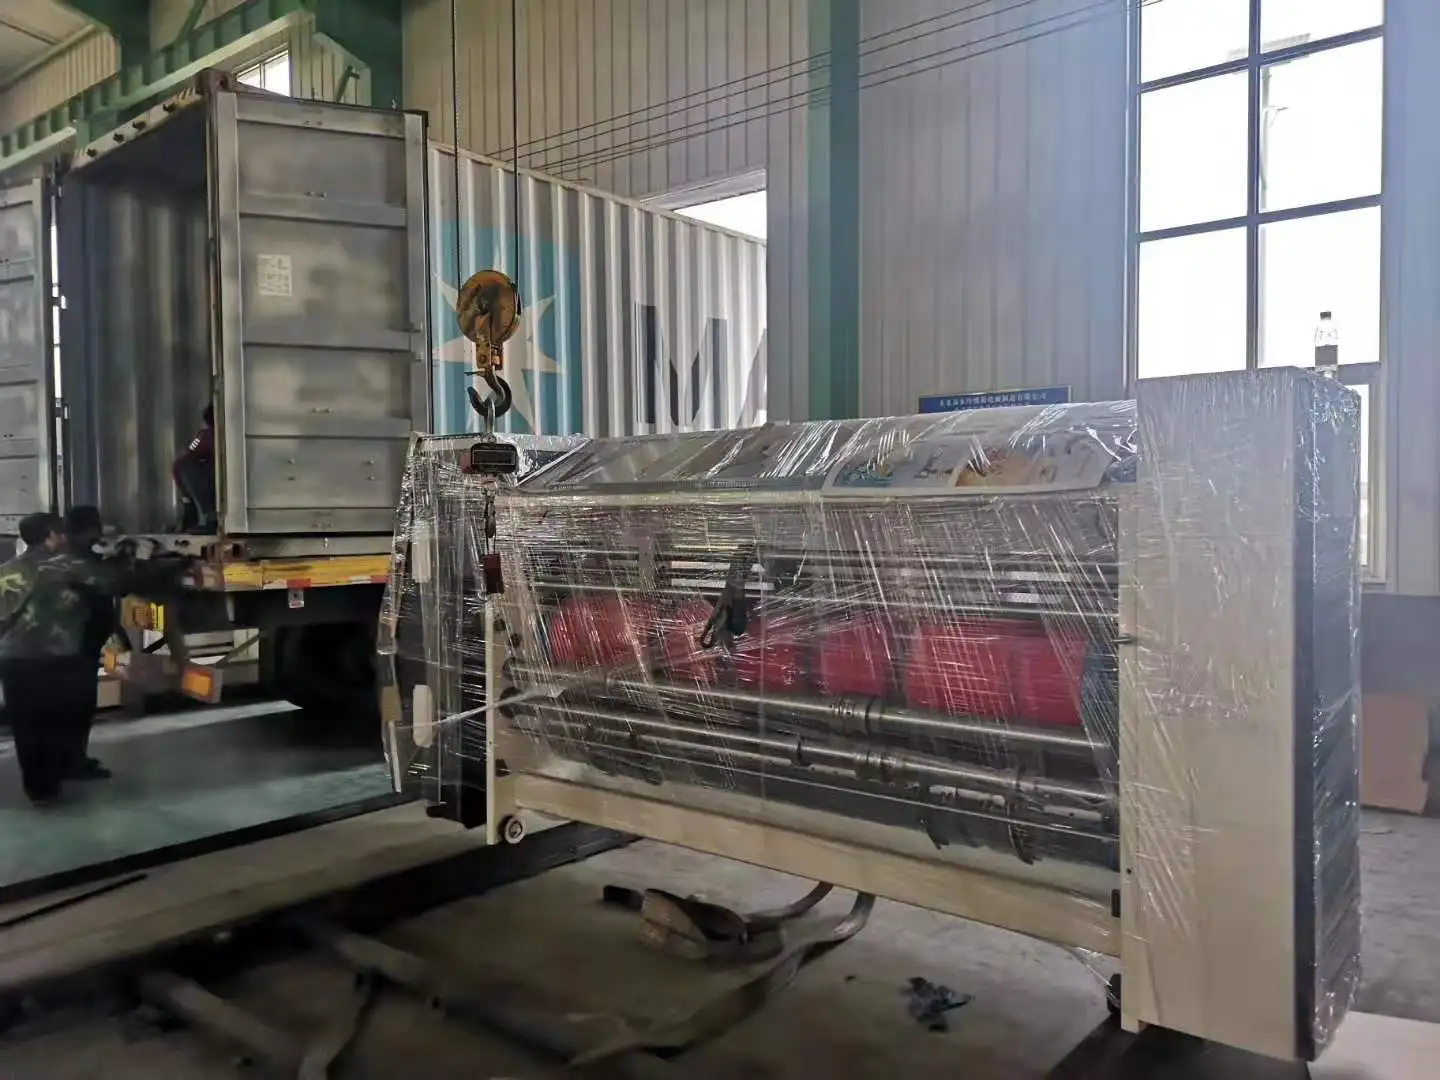 AutomaticPizza Box Printing Machine Corrugated Cardboard Flexo Print Slot Die Cut Equipment China 2020 New Type